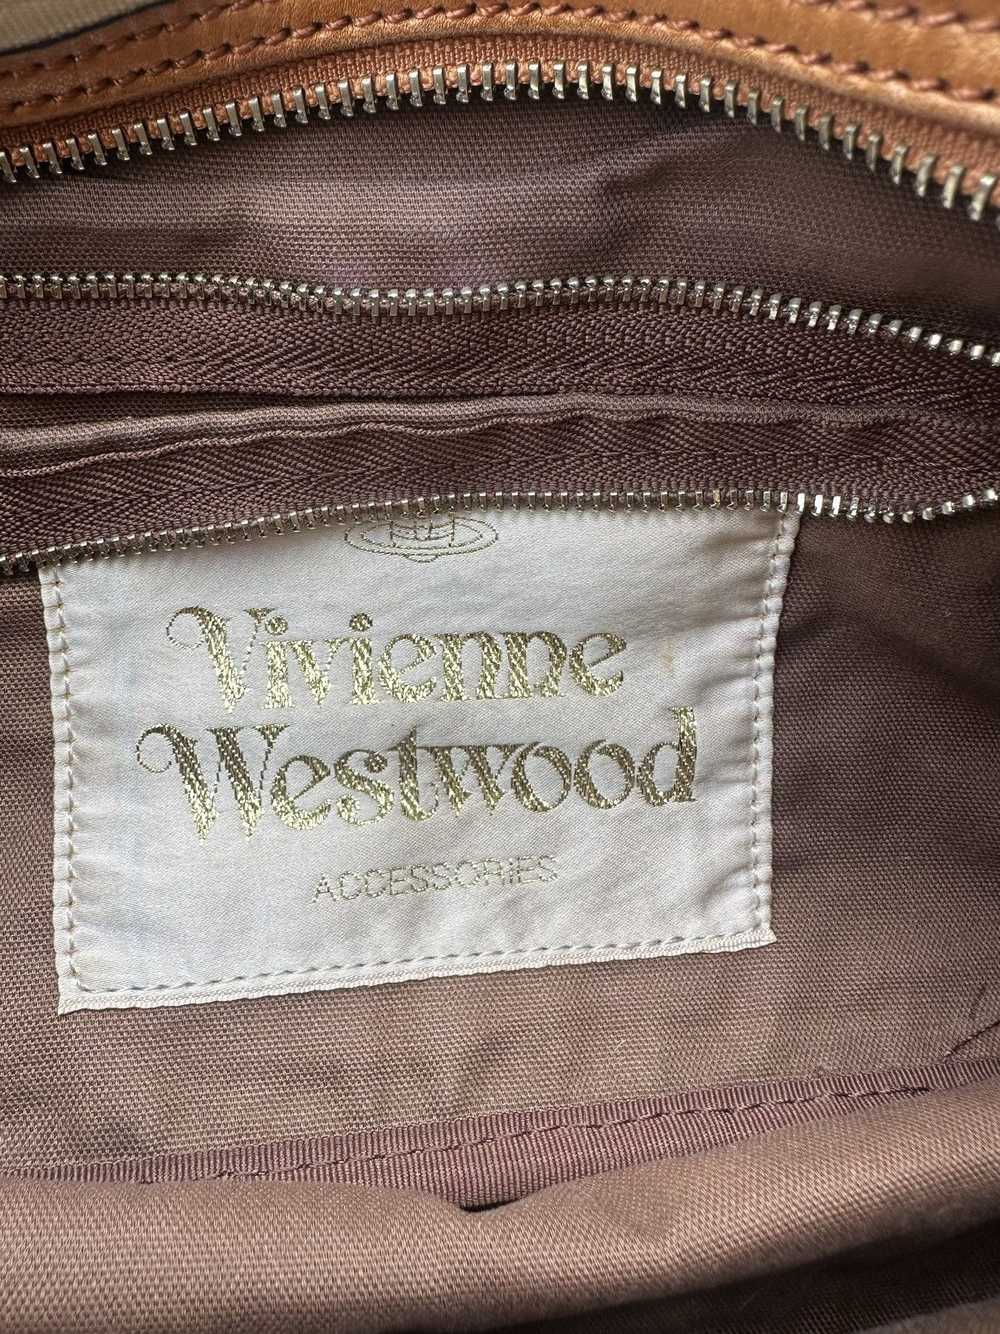 Vivienne Westwood Vivienne Westwood Shoulder Bag - image 9